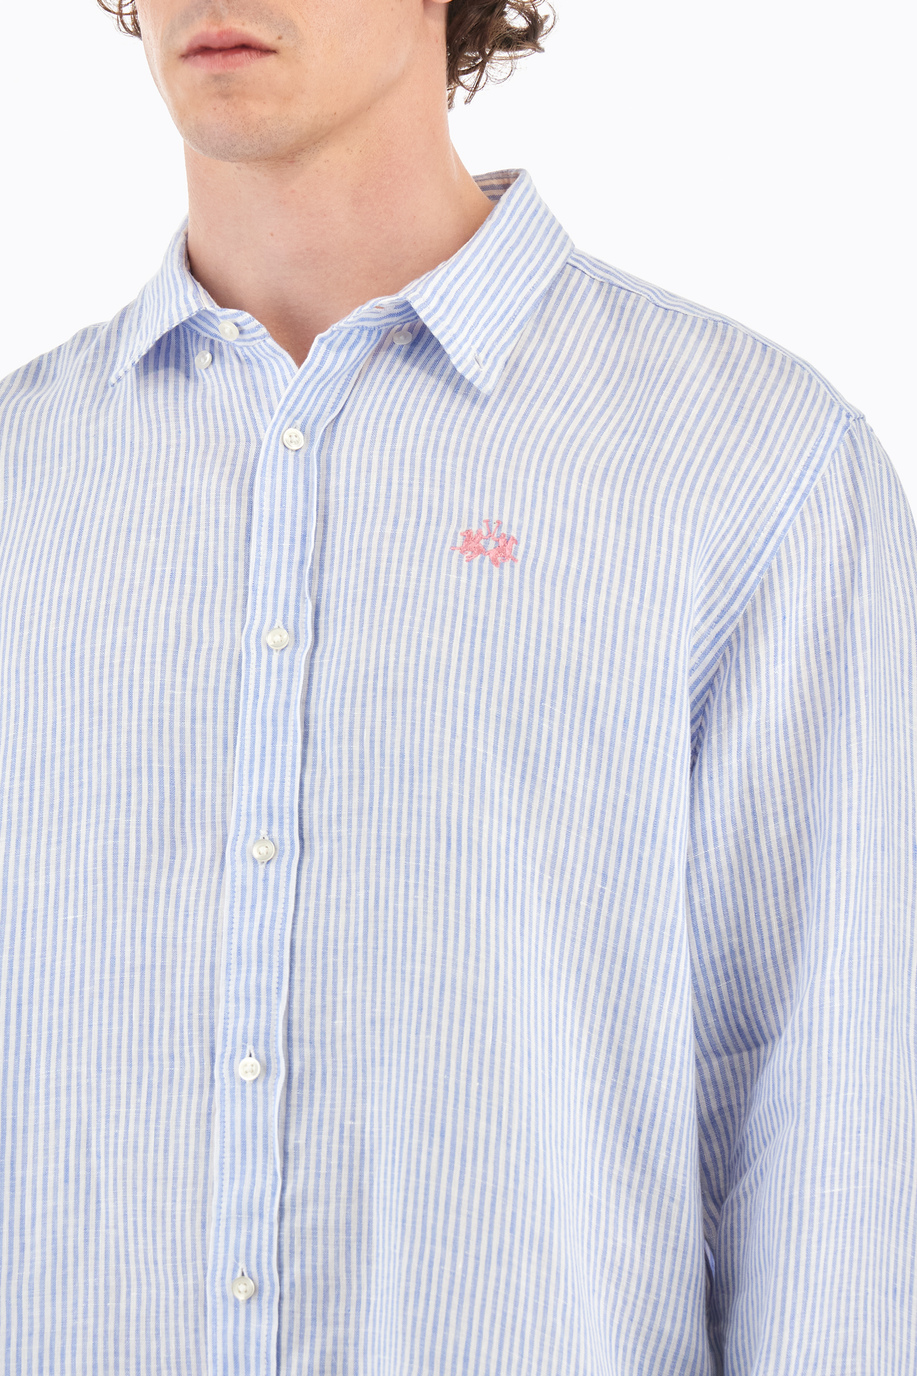 Cotton shirt with a striped pprint - Rodolfo - XLarge sizes | La Martina - Official Online Shop